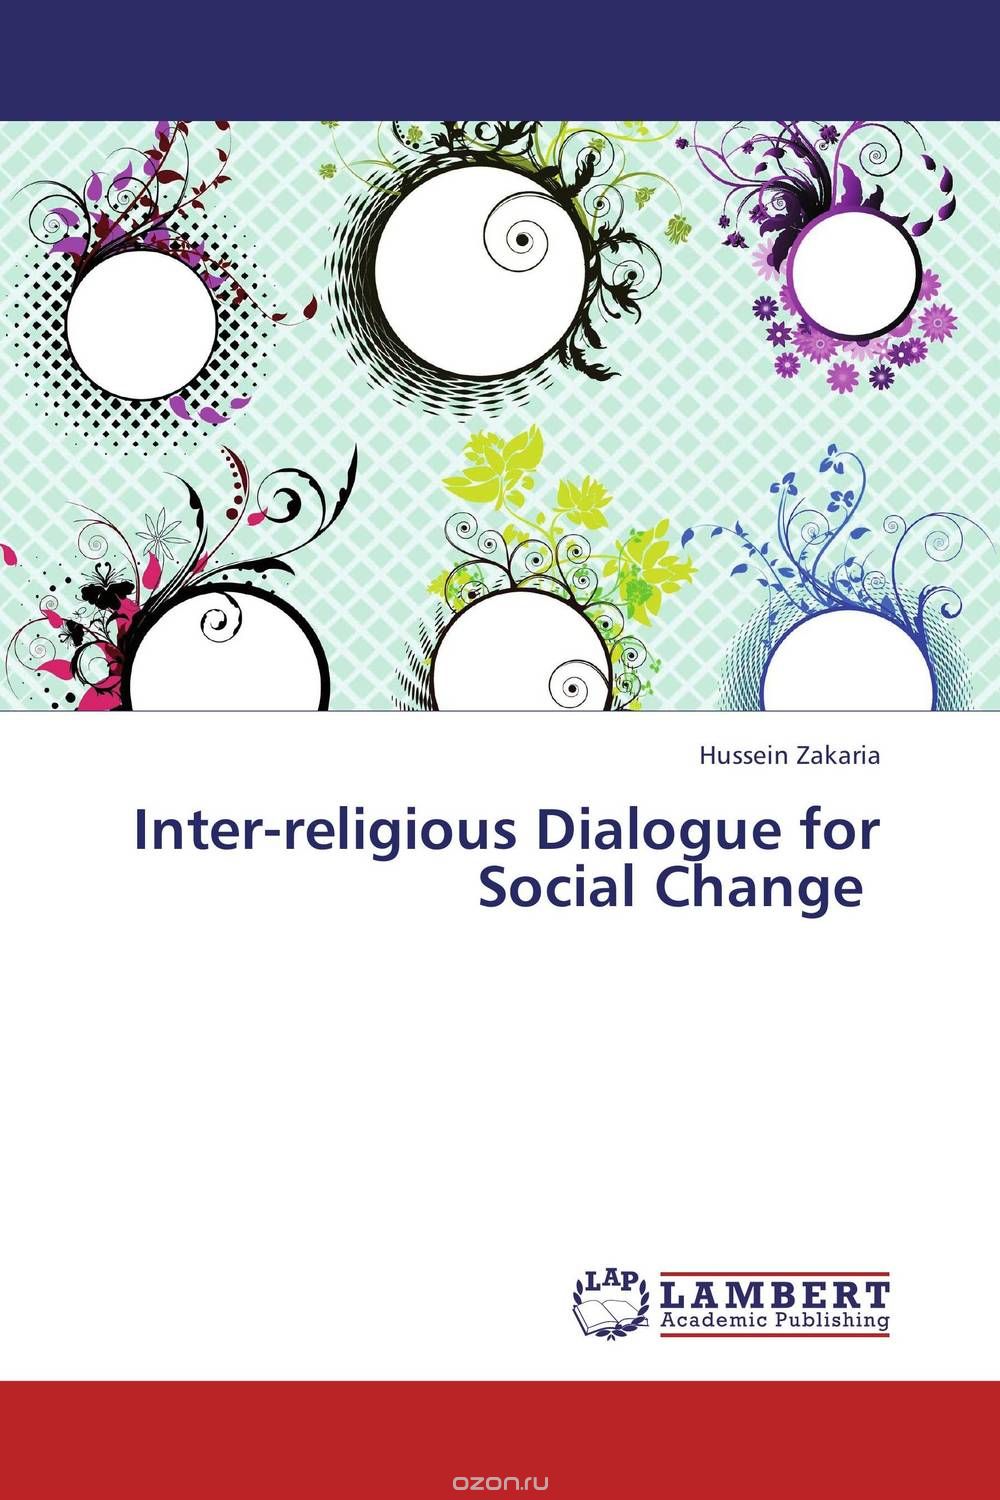 Inter-religious Dialogue for Social Change